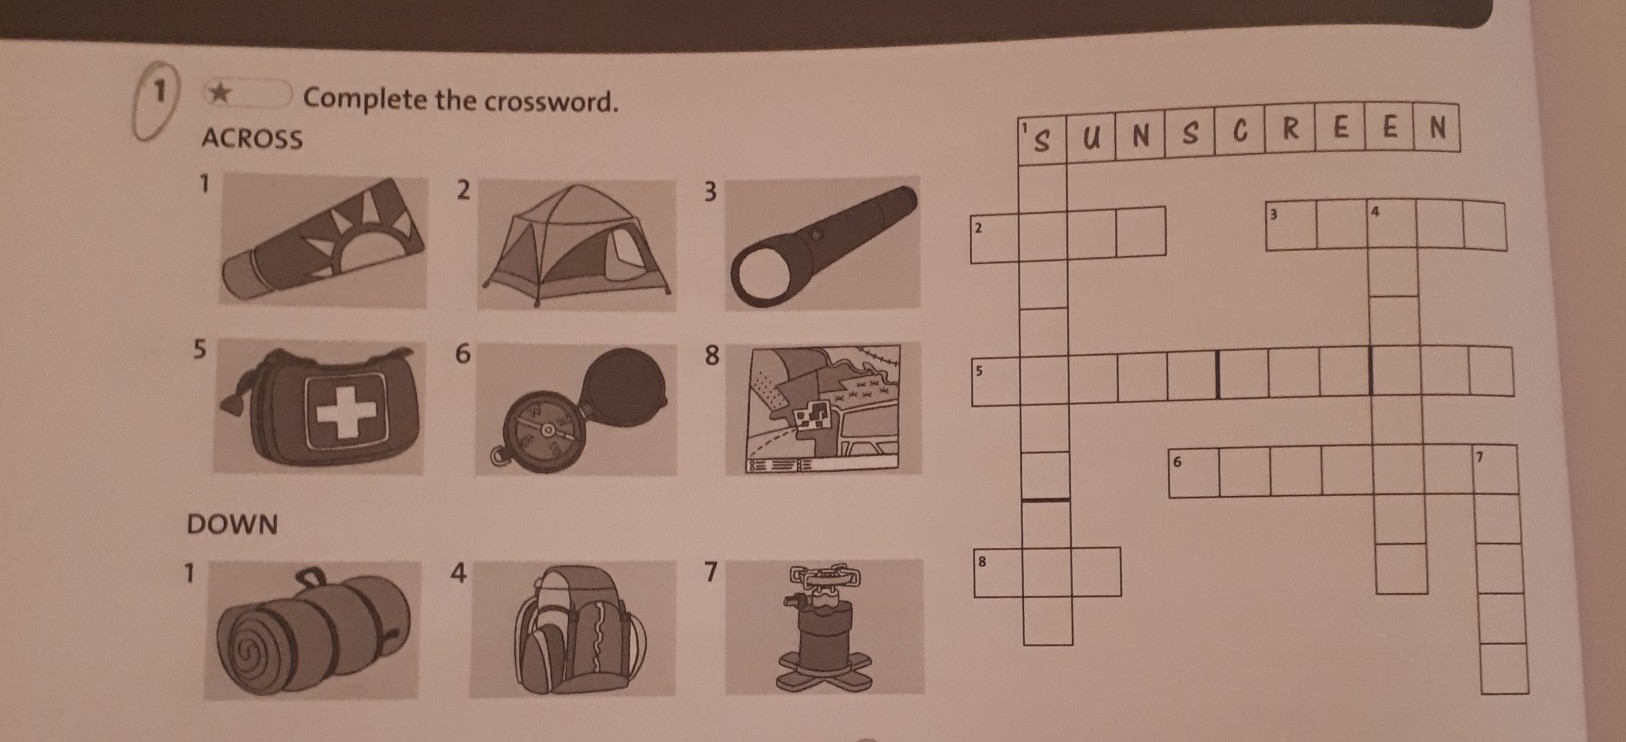 Do the crossword puzzle 5. Crossword complete the crossword. Complete the crossword. Down across. Look and complete the crossword ответы. Задание do the crossword Puzzle.